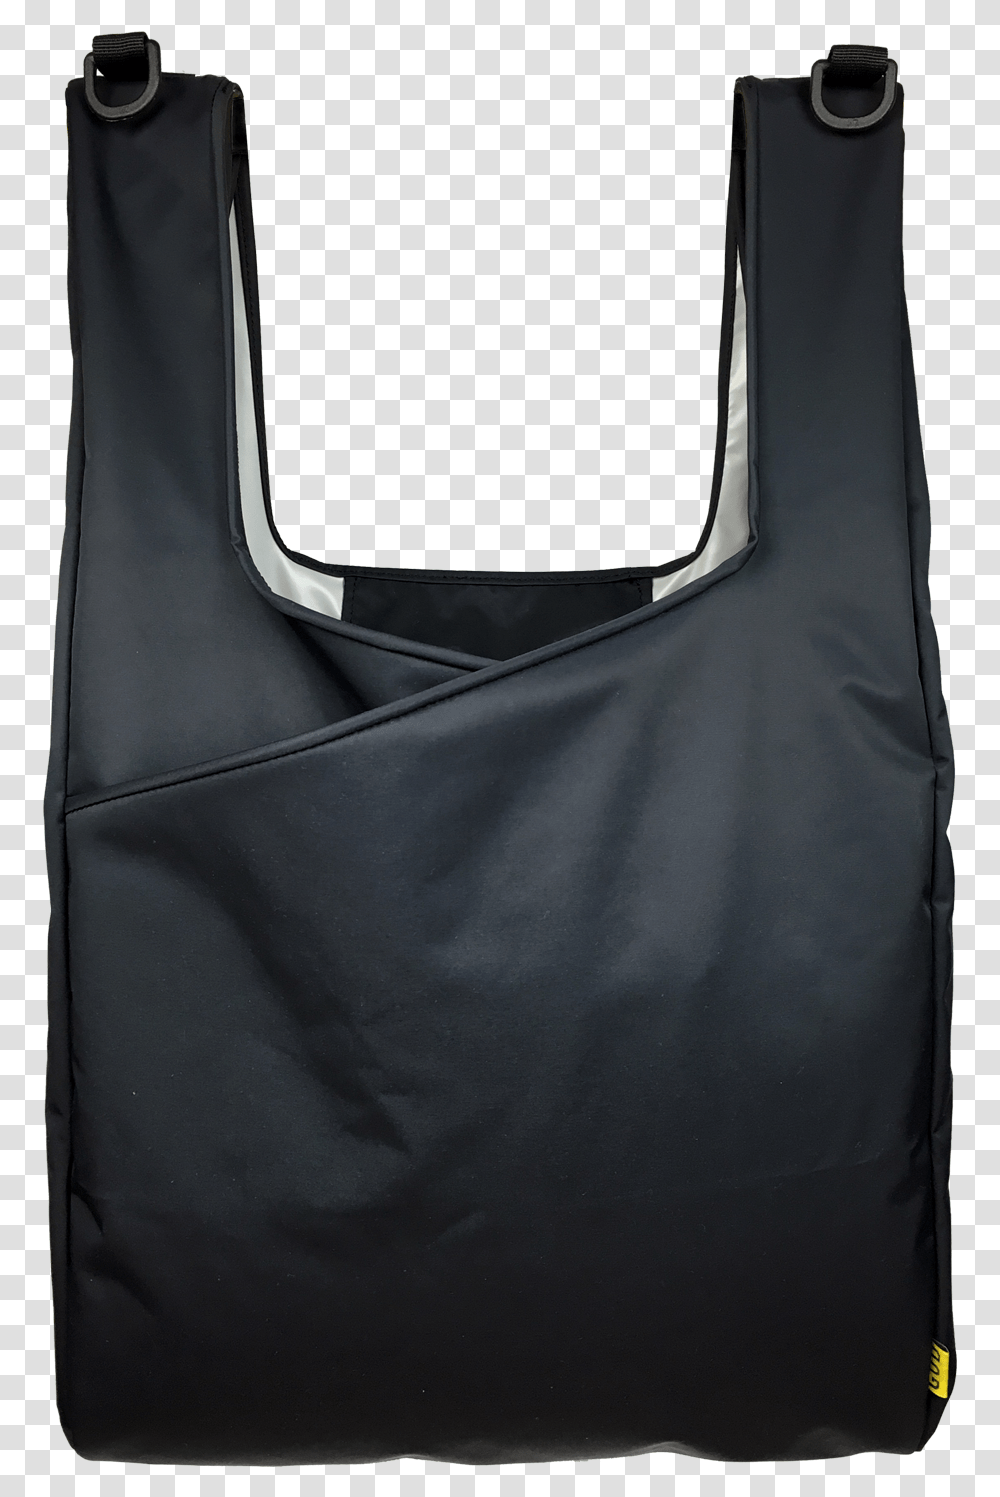 Optimized Gud Compras Tote Bag Dark Navy Face Handbag, Cushion, Accessories, Accessory, Shopping Bag Transparent Png